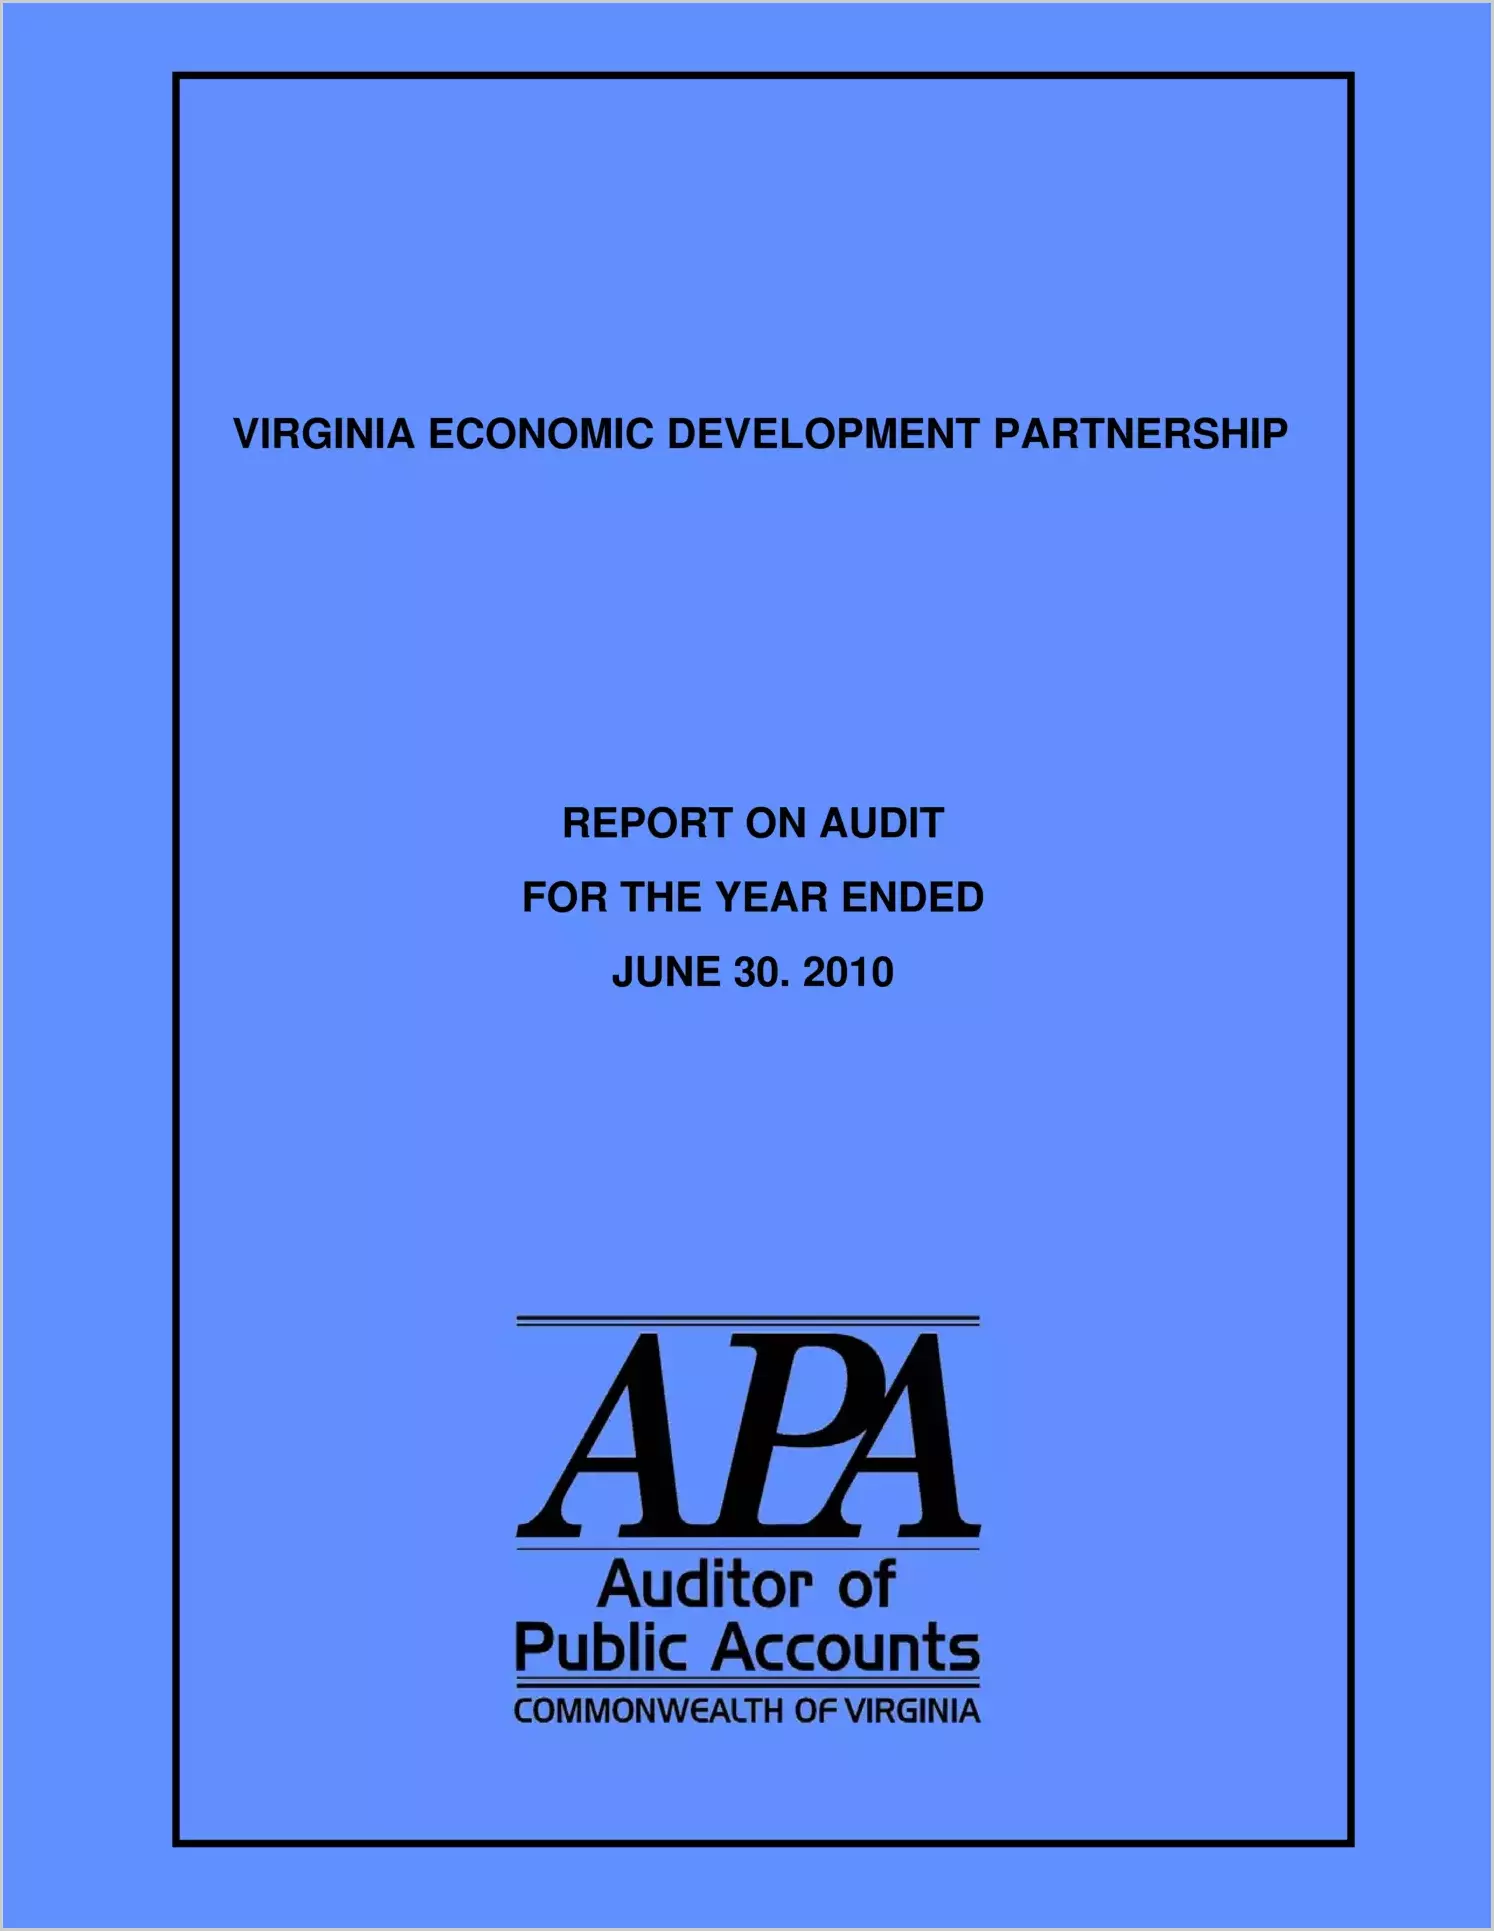 Virginia Economic Development Partnership for the year ended June 30, 2010